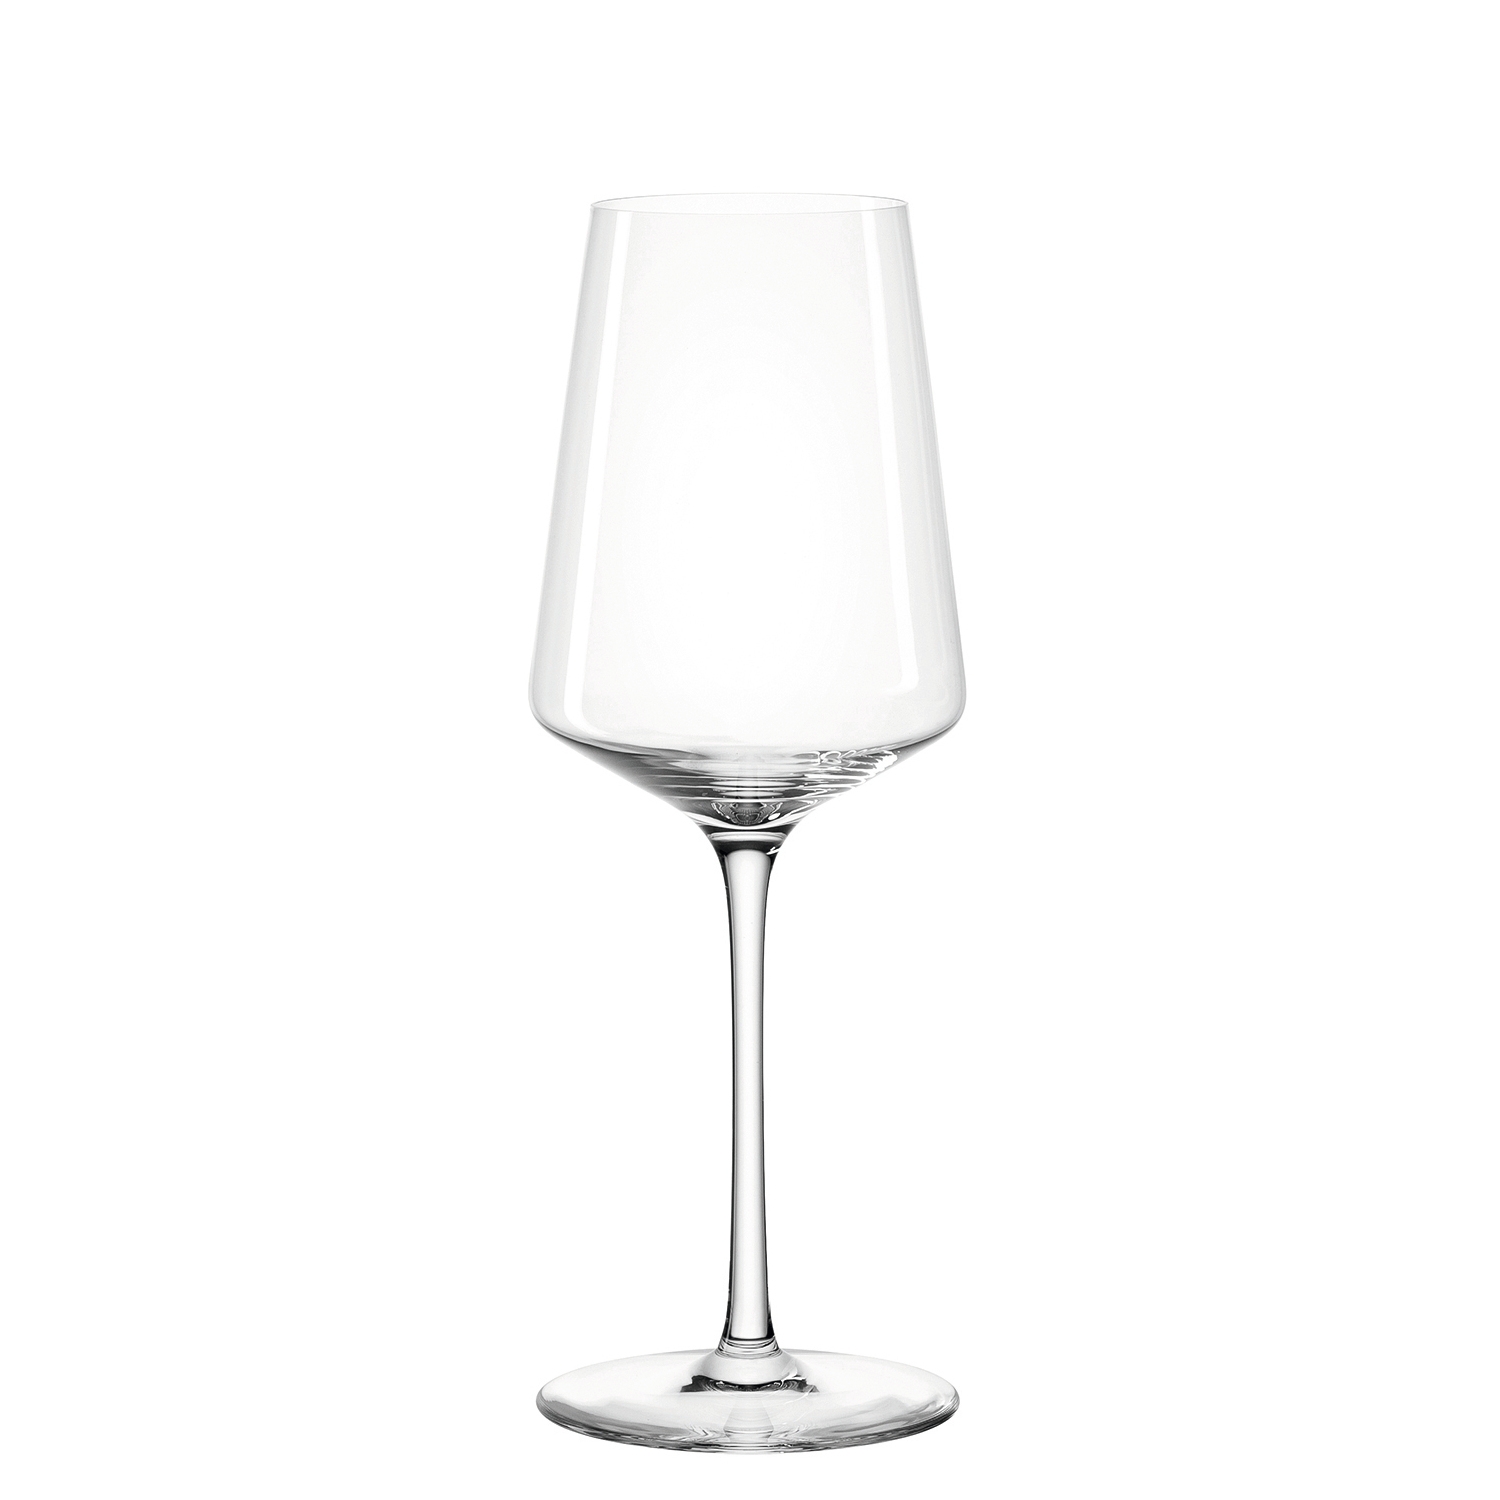  Rieslingglas   Puccini    Maße: 23 x 8,2 x 8,2 cm (HxBxT) 